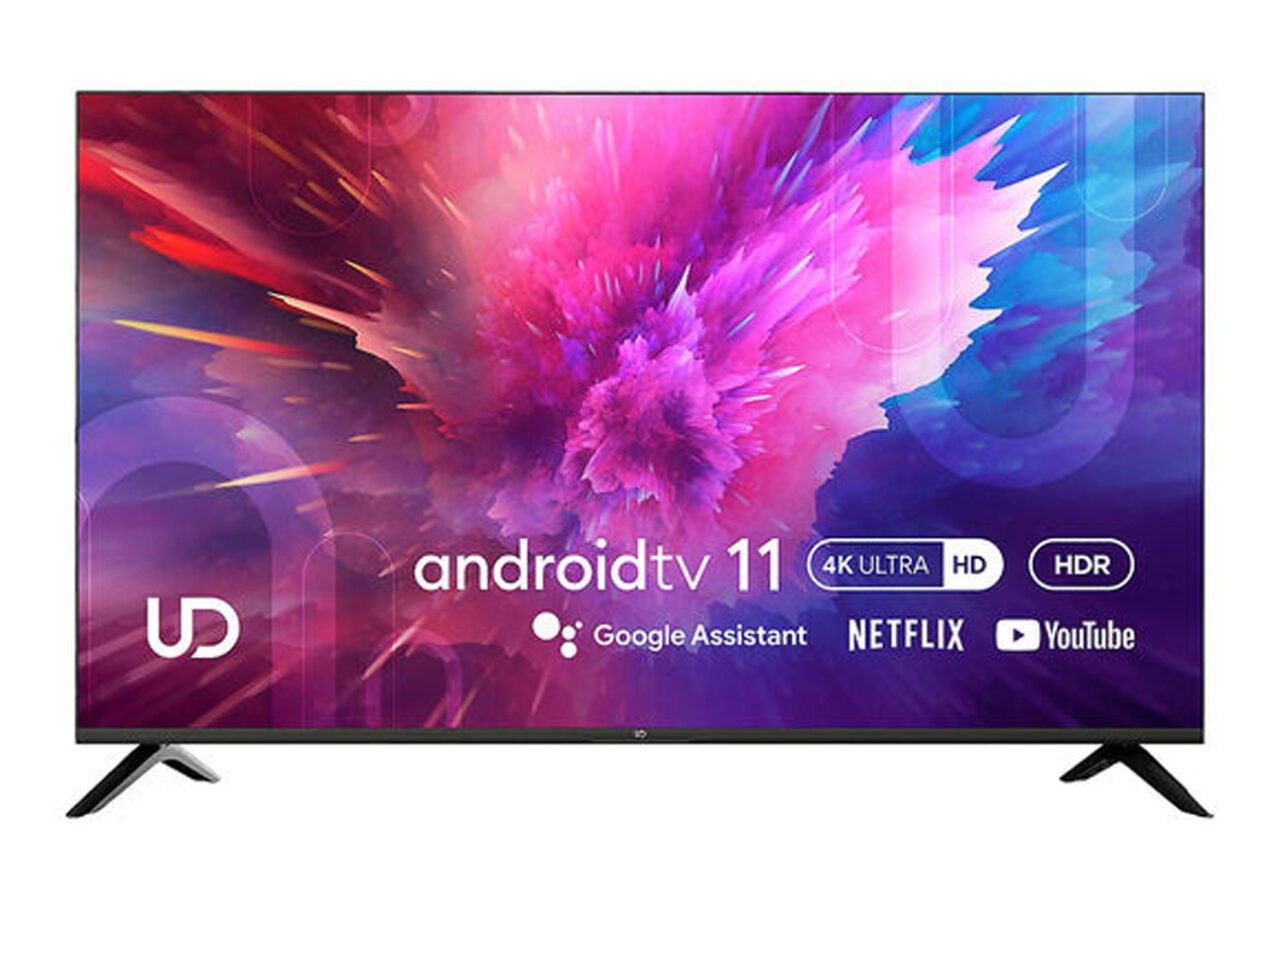 65-calowy TV z systemem Android TV 11, obsługujący Google Assistant, 4K Ultra HD, HDR, Netflix i YouTube.